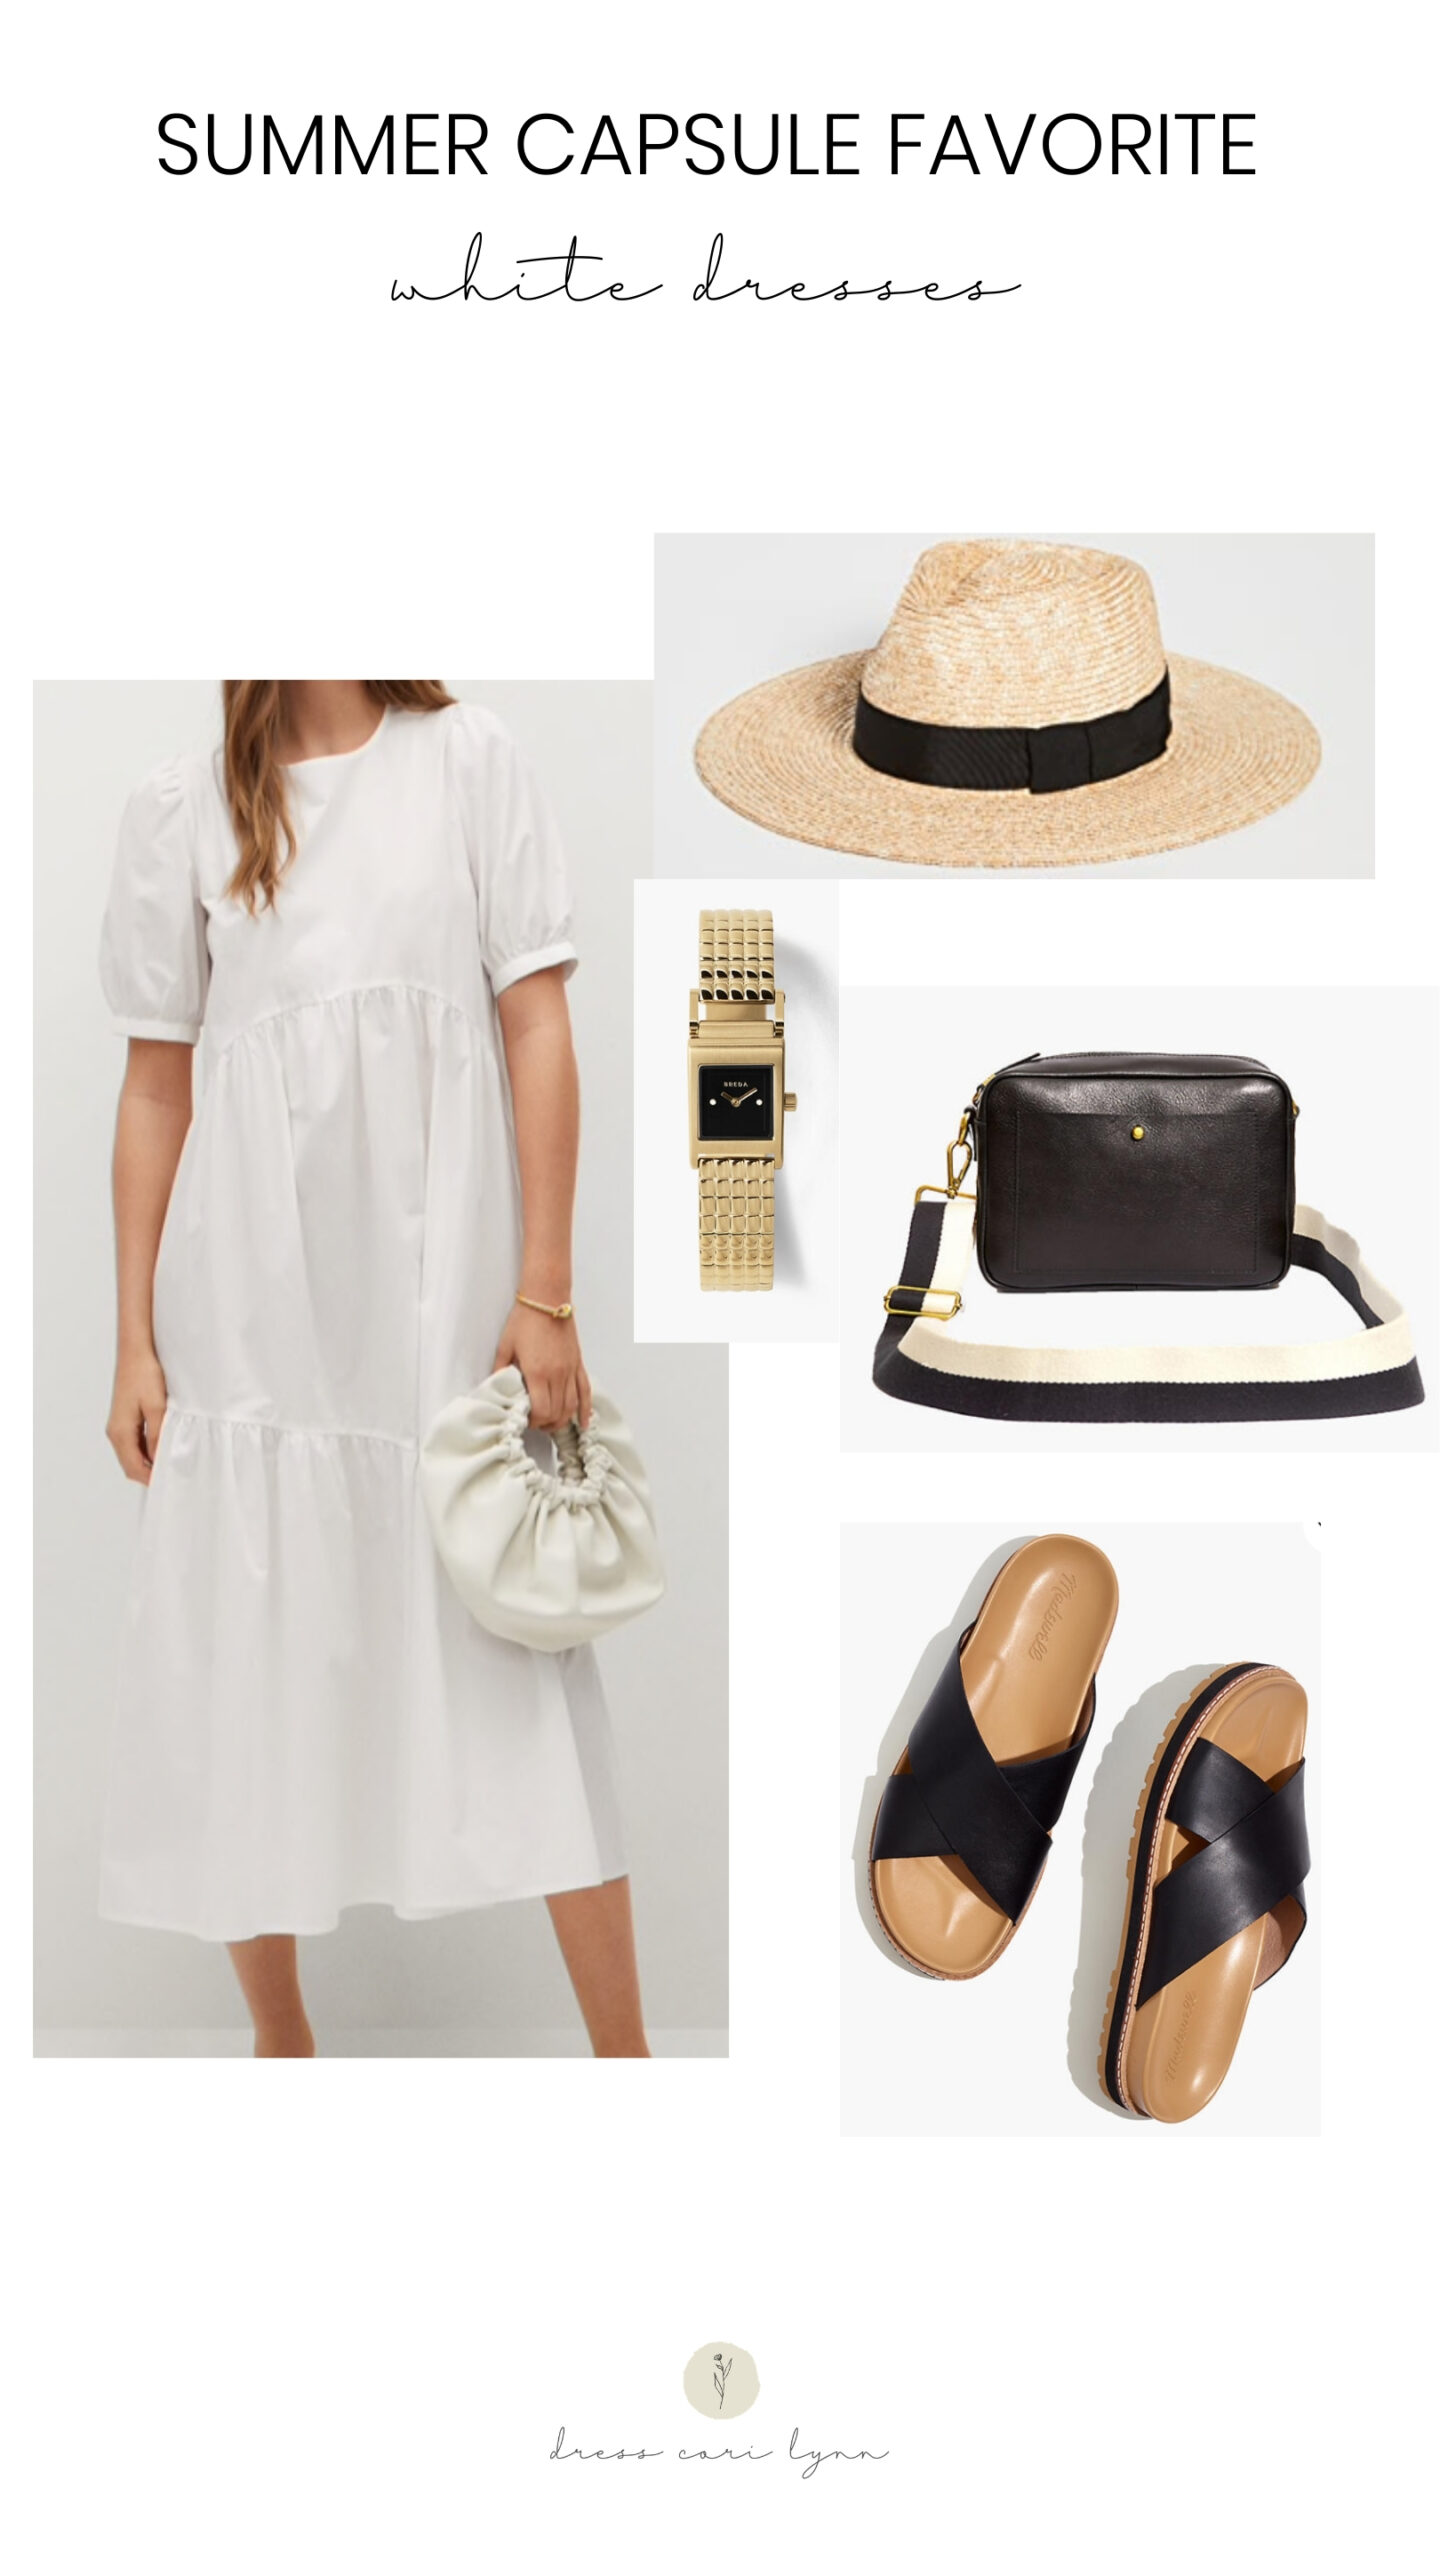 summer capsule favorite: white dresses. - dress cori lynn